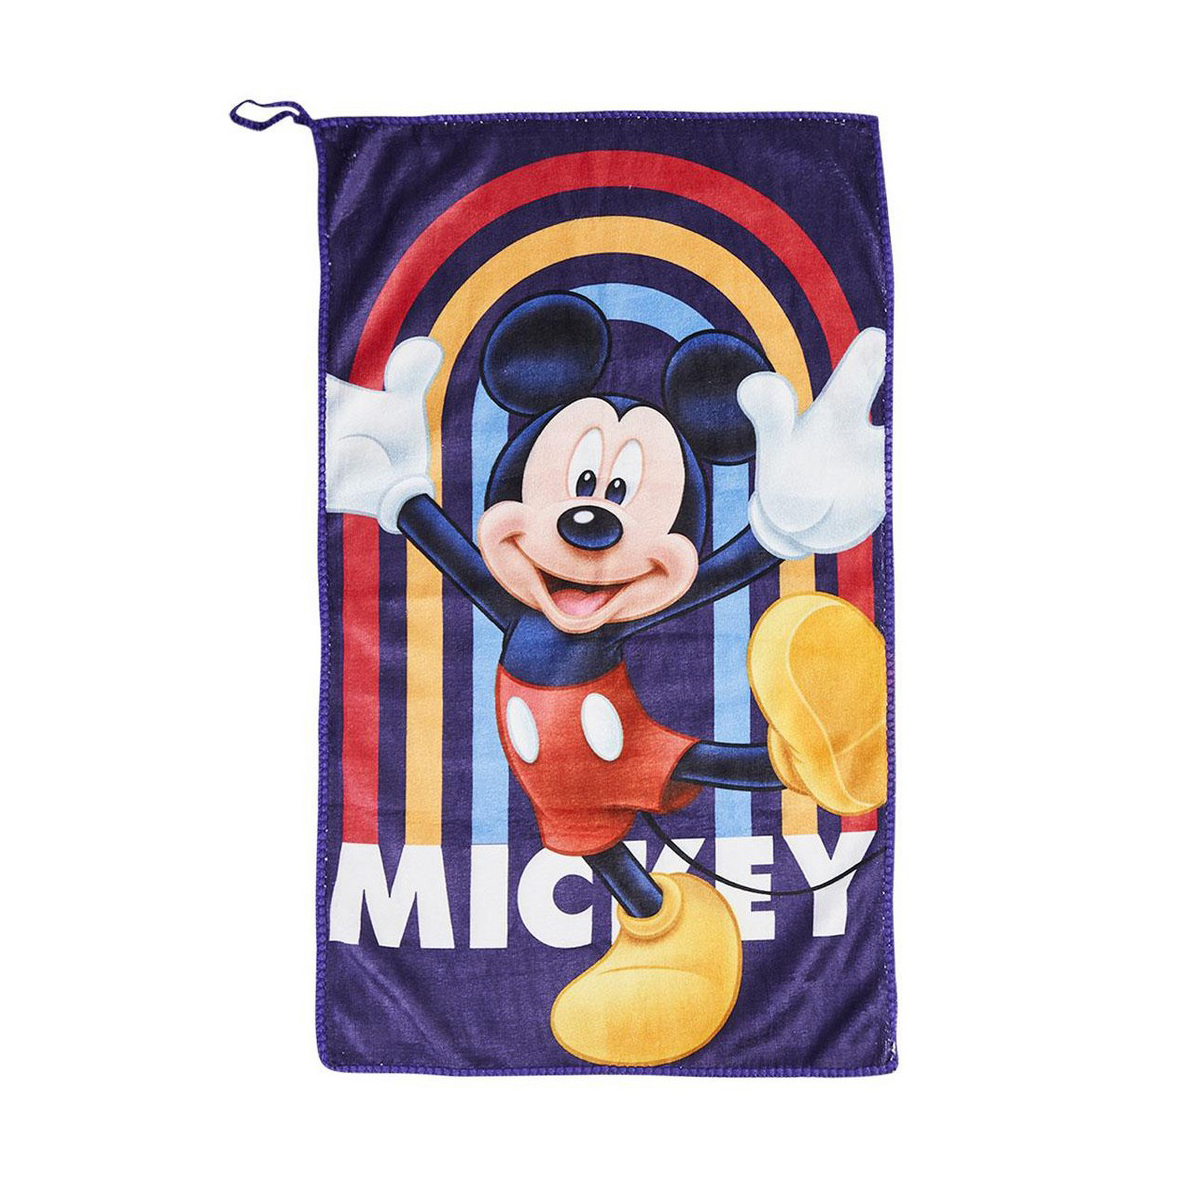 Kinder Reisetoilettengarnitur Mickey Mouse Blau (23 x 16 x 7 cm) (4 pcs)